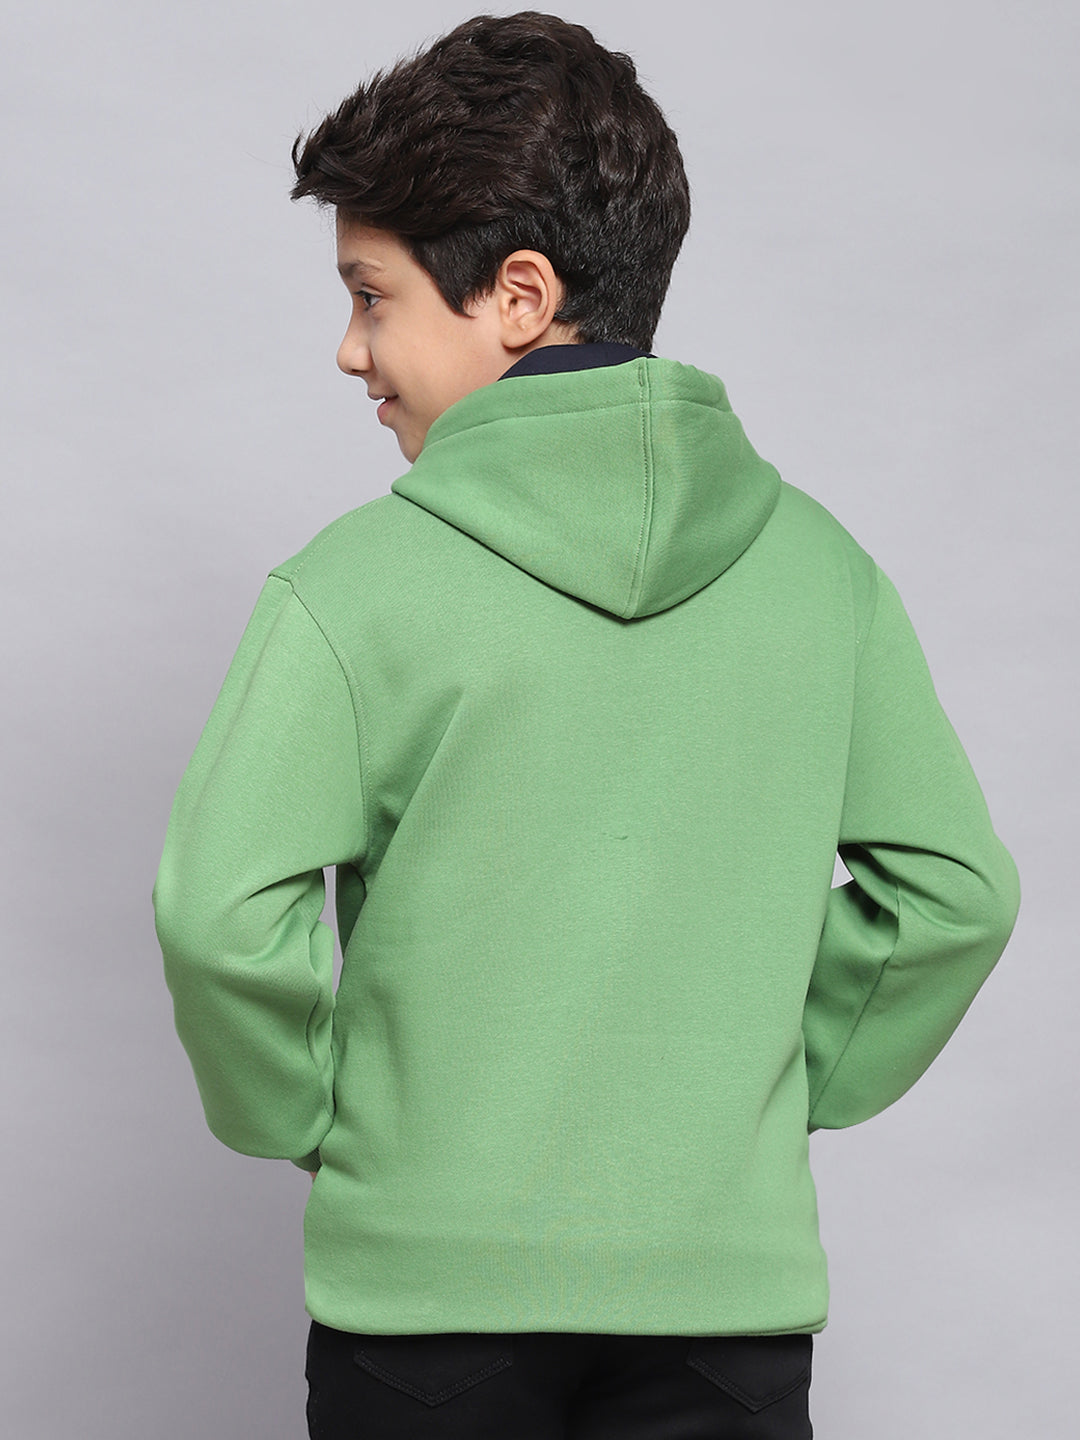 Boys Green Printed Hooded Full Sleeve Sweatshirt